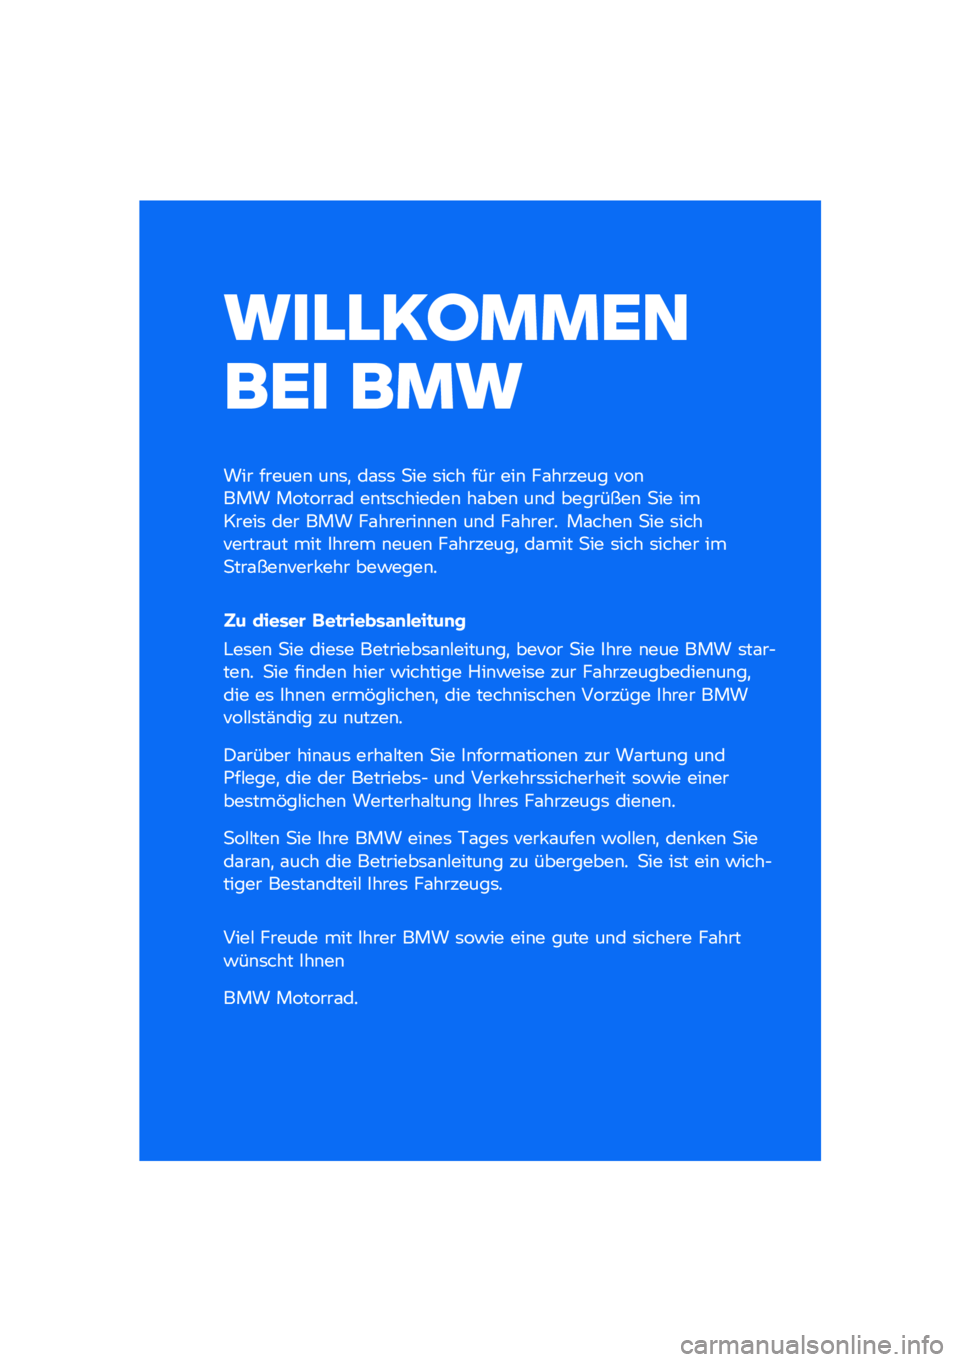 BMW MOTORRAD F 900 R 2020  Betriebsanleitung (in German) ���������\b�	
�
�\b� �
��
��� ������\b ��\b�	�
 ��\f�	�	 �
�� �	��� ��� ���\b ��\f������ ���\b��� �������\f� ��\b��	�������\b ��\f���\b ��